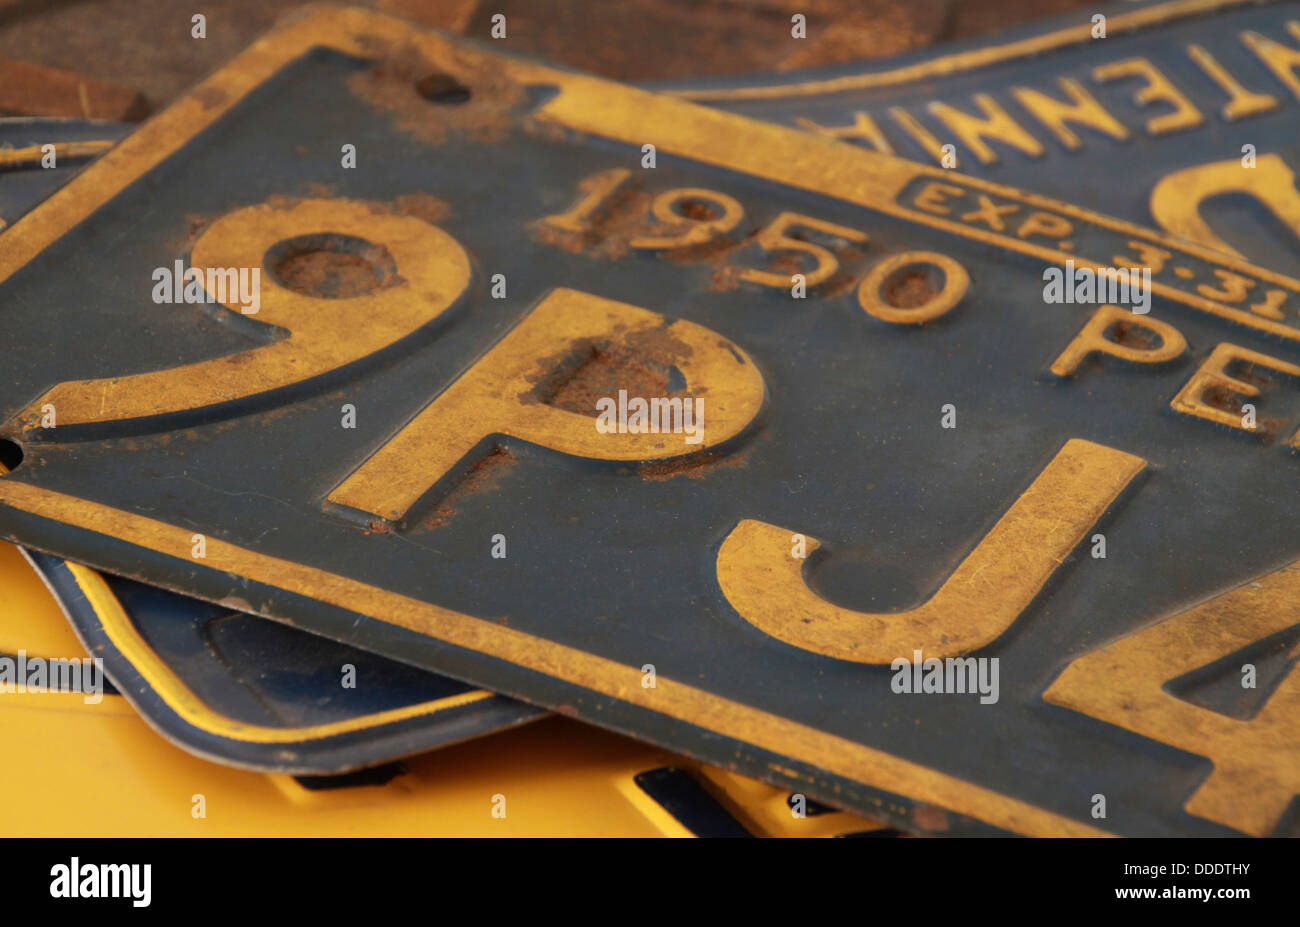 Array of antique Pennsylvania license plates Stock Photo